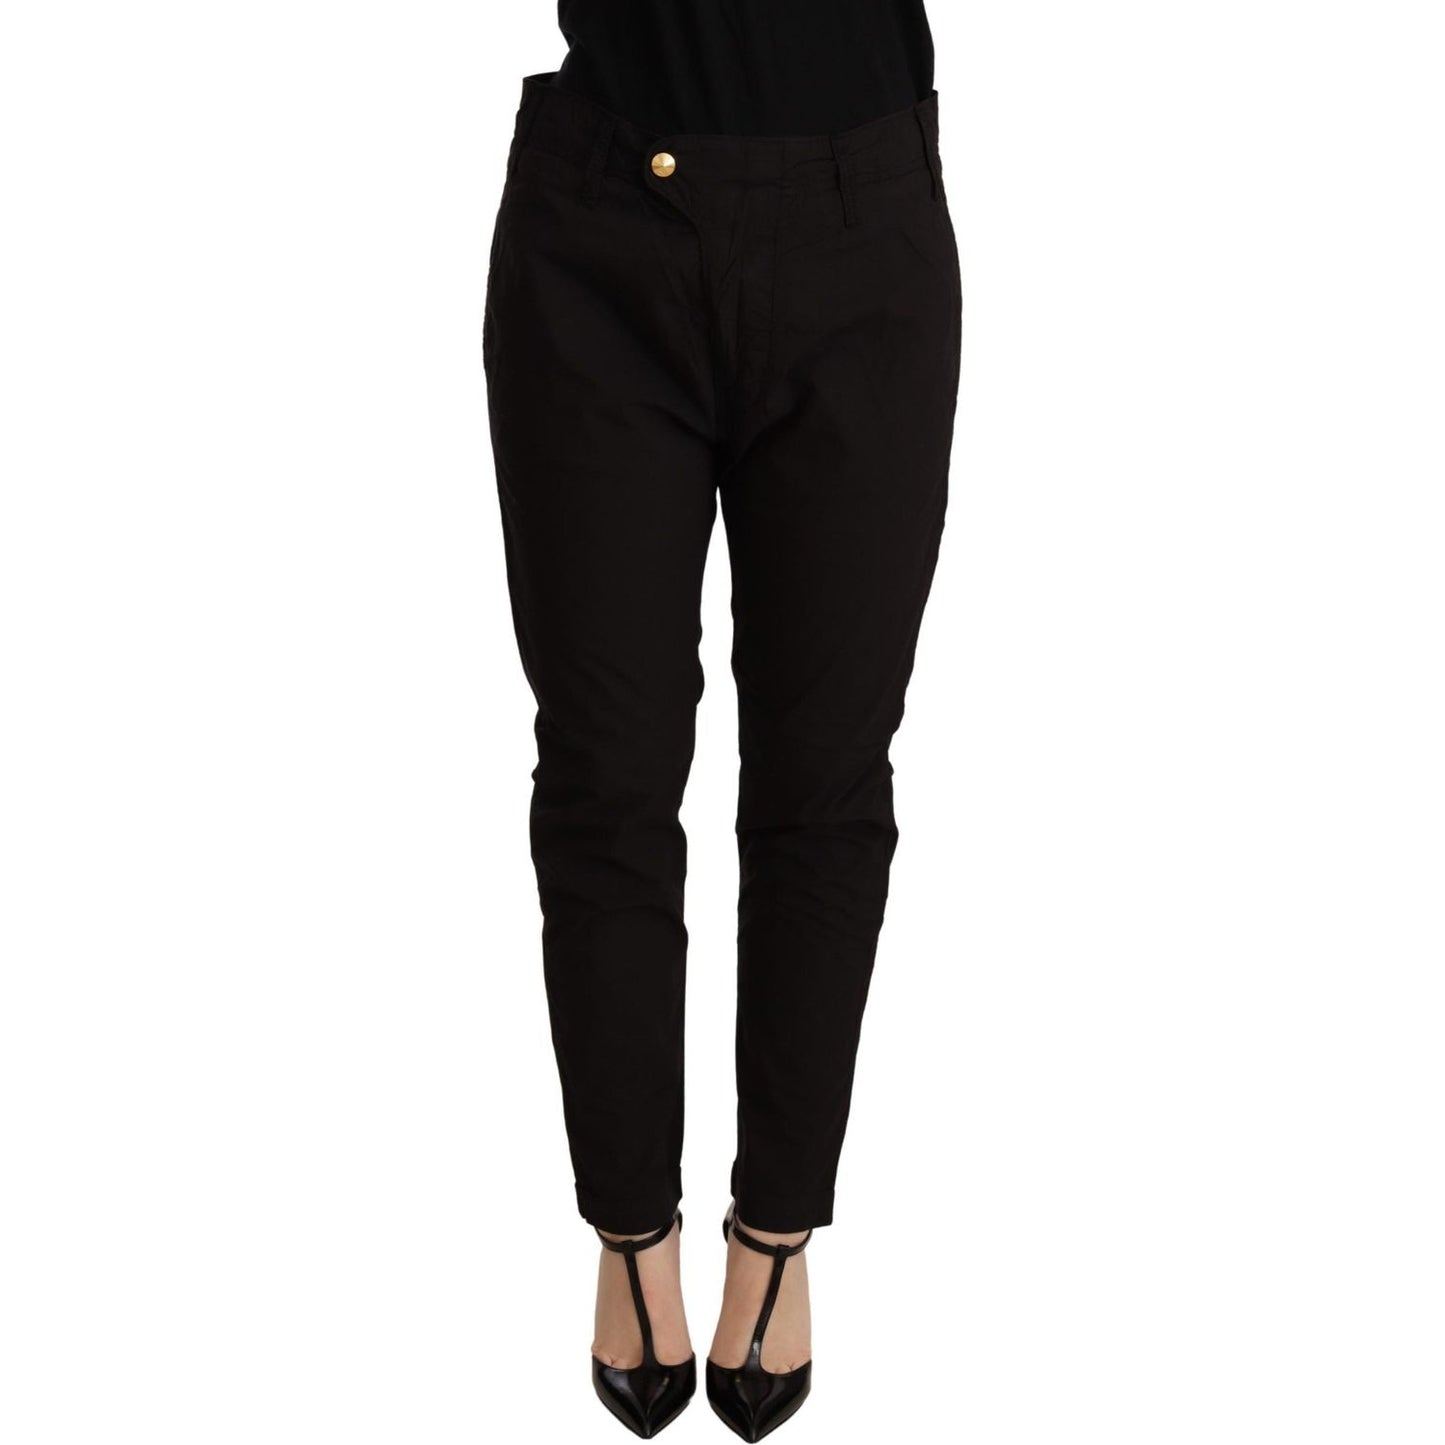 CYCLE Elegant Black Baggy Cotton Pants WOMAN TROUSERS black-mid-waist-baggy-fit-skinny-trouser IMG_5112-scaled-bd95db45-c1c.jpg